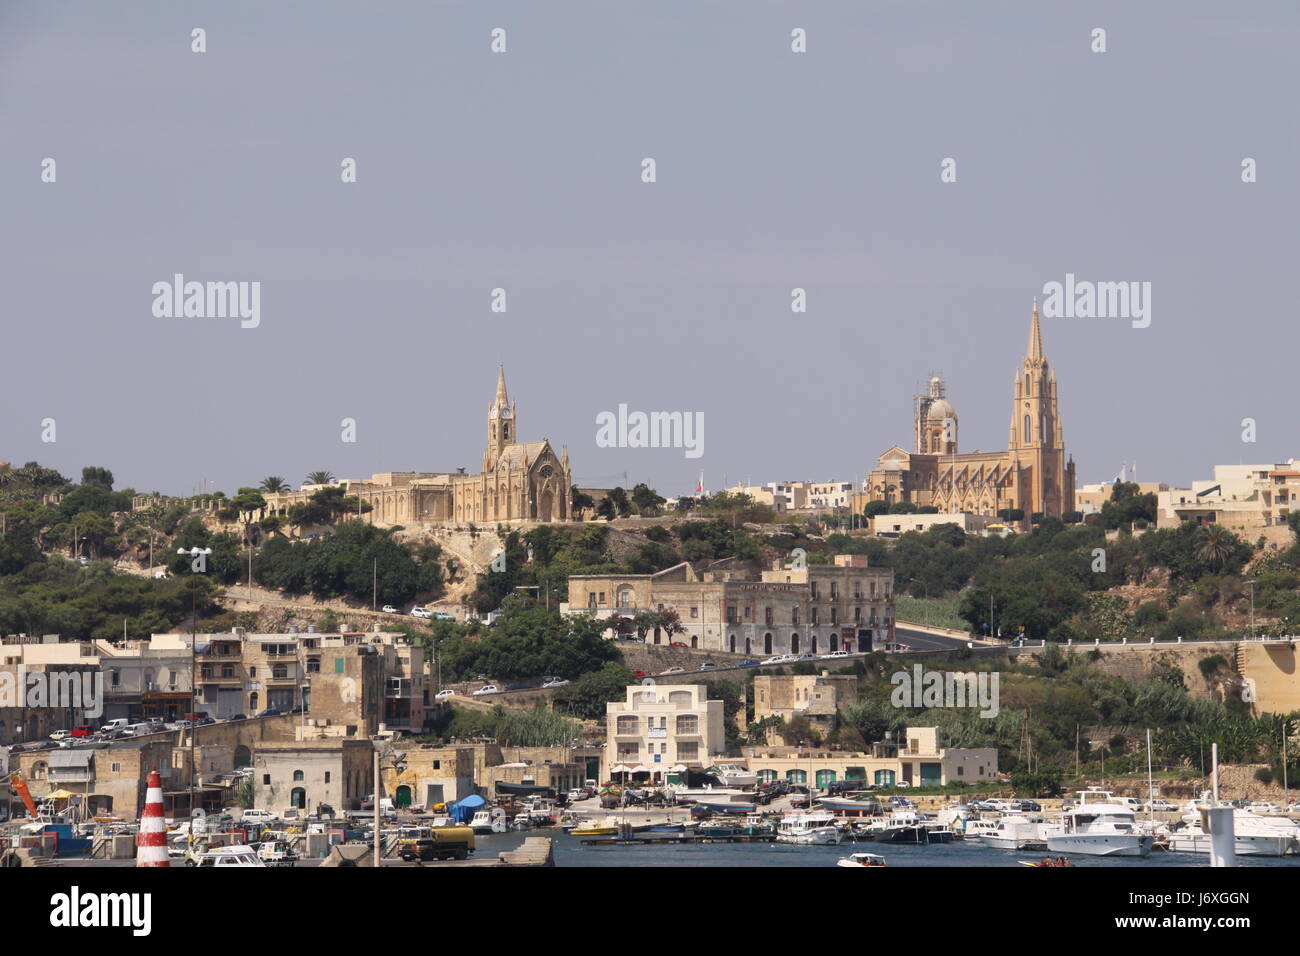 Blaue Stadt Stadt Wasser Mittelmeer Salzwasser Meer Ozean Hafen Rock malta Stockfoto